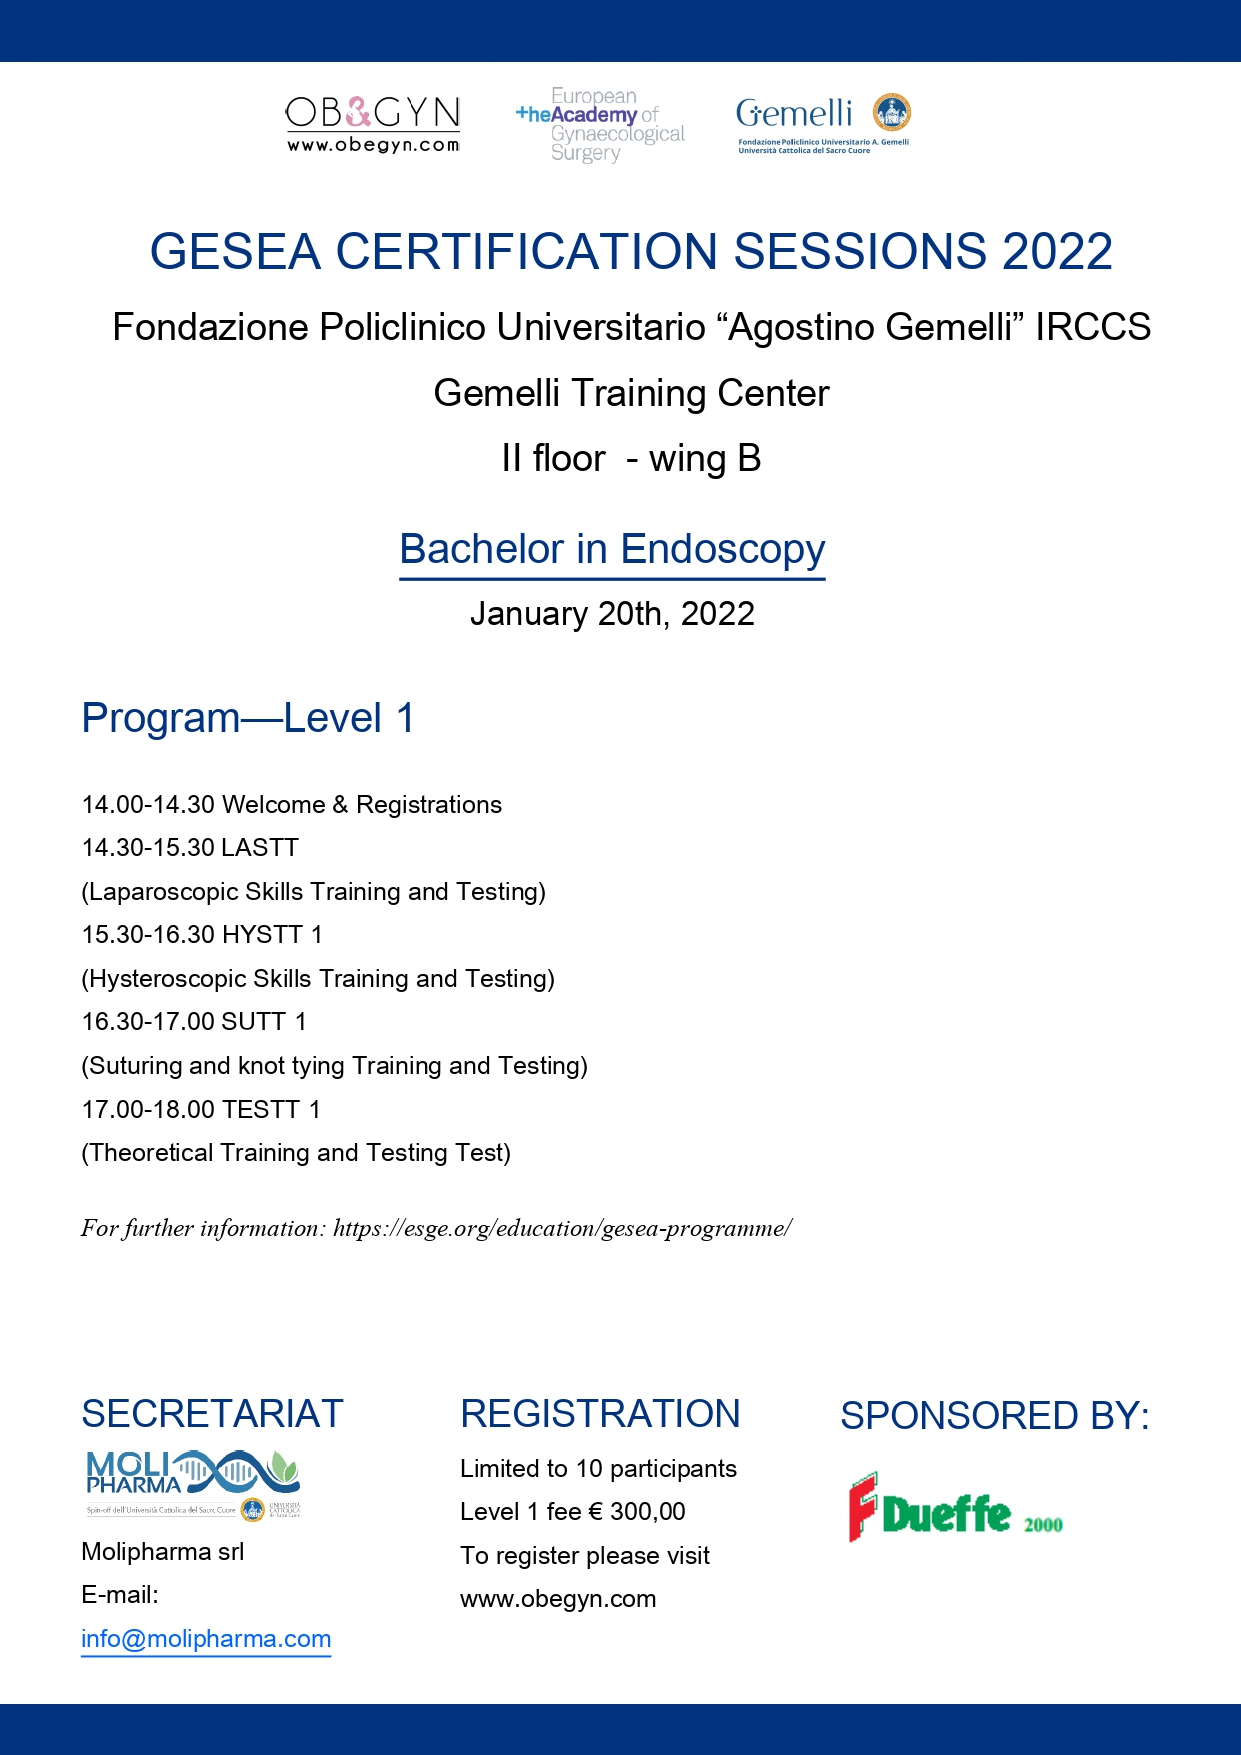 Programma GESEA CERTIFICATION SESSIONS 2022 - Bachelor in Endoscopy